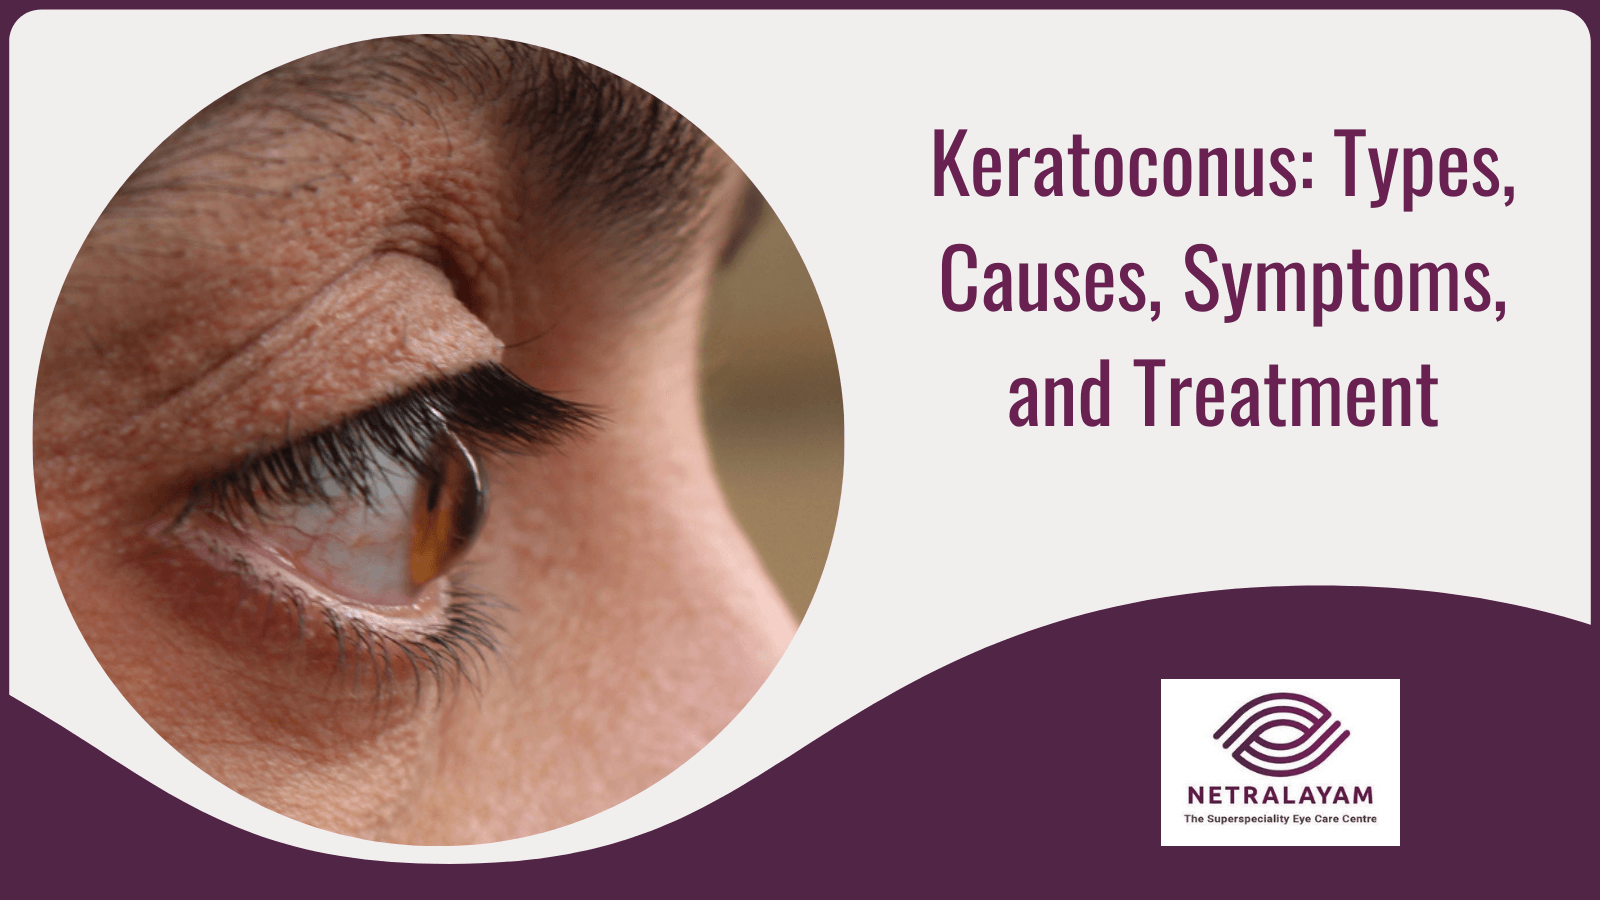 Keratoconus: Types, Causes, Symptoms, and Treatment